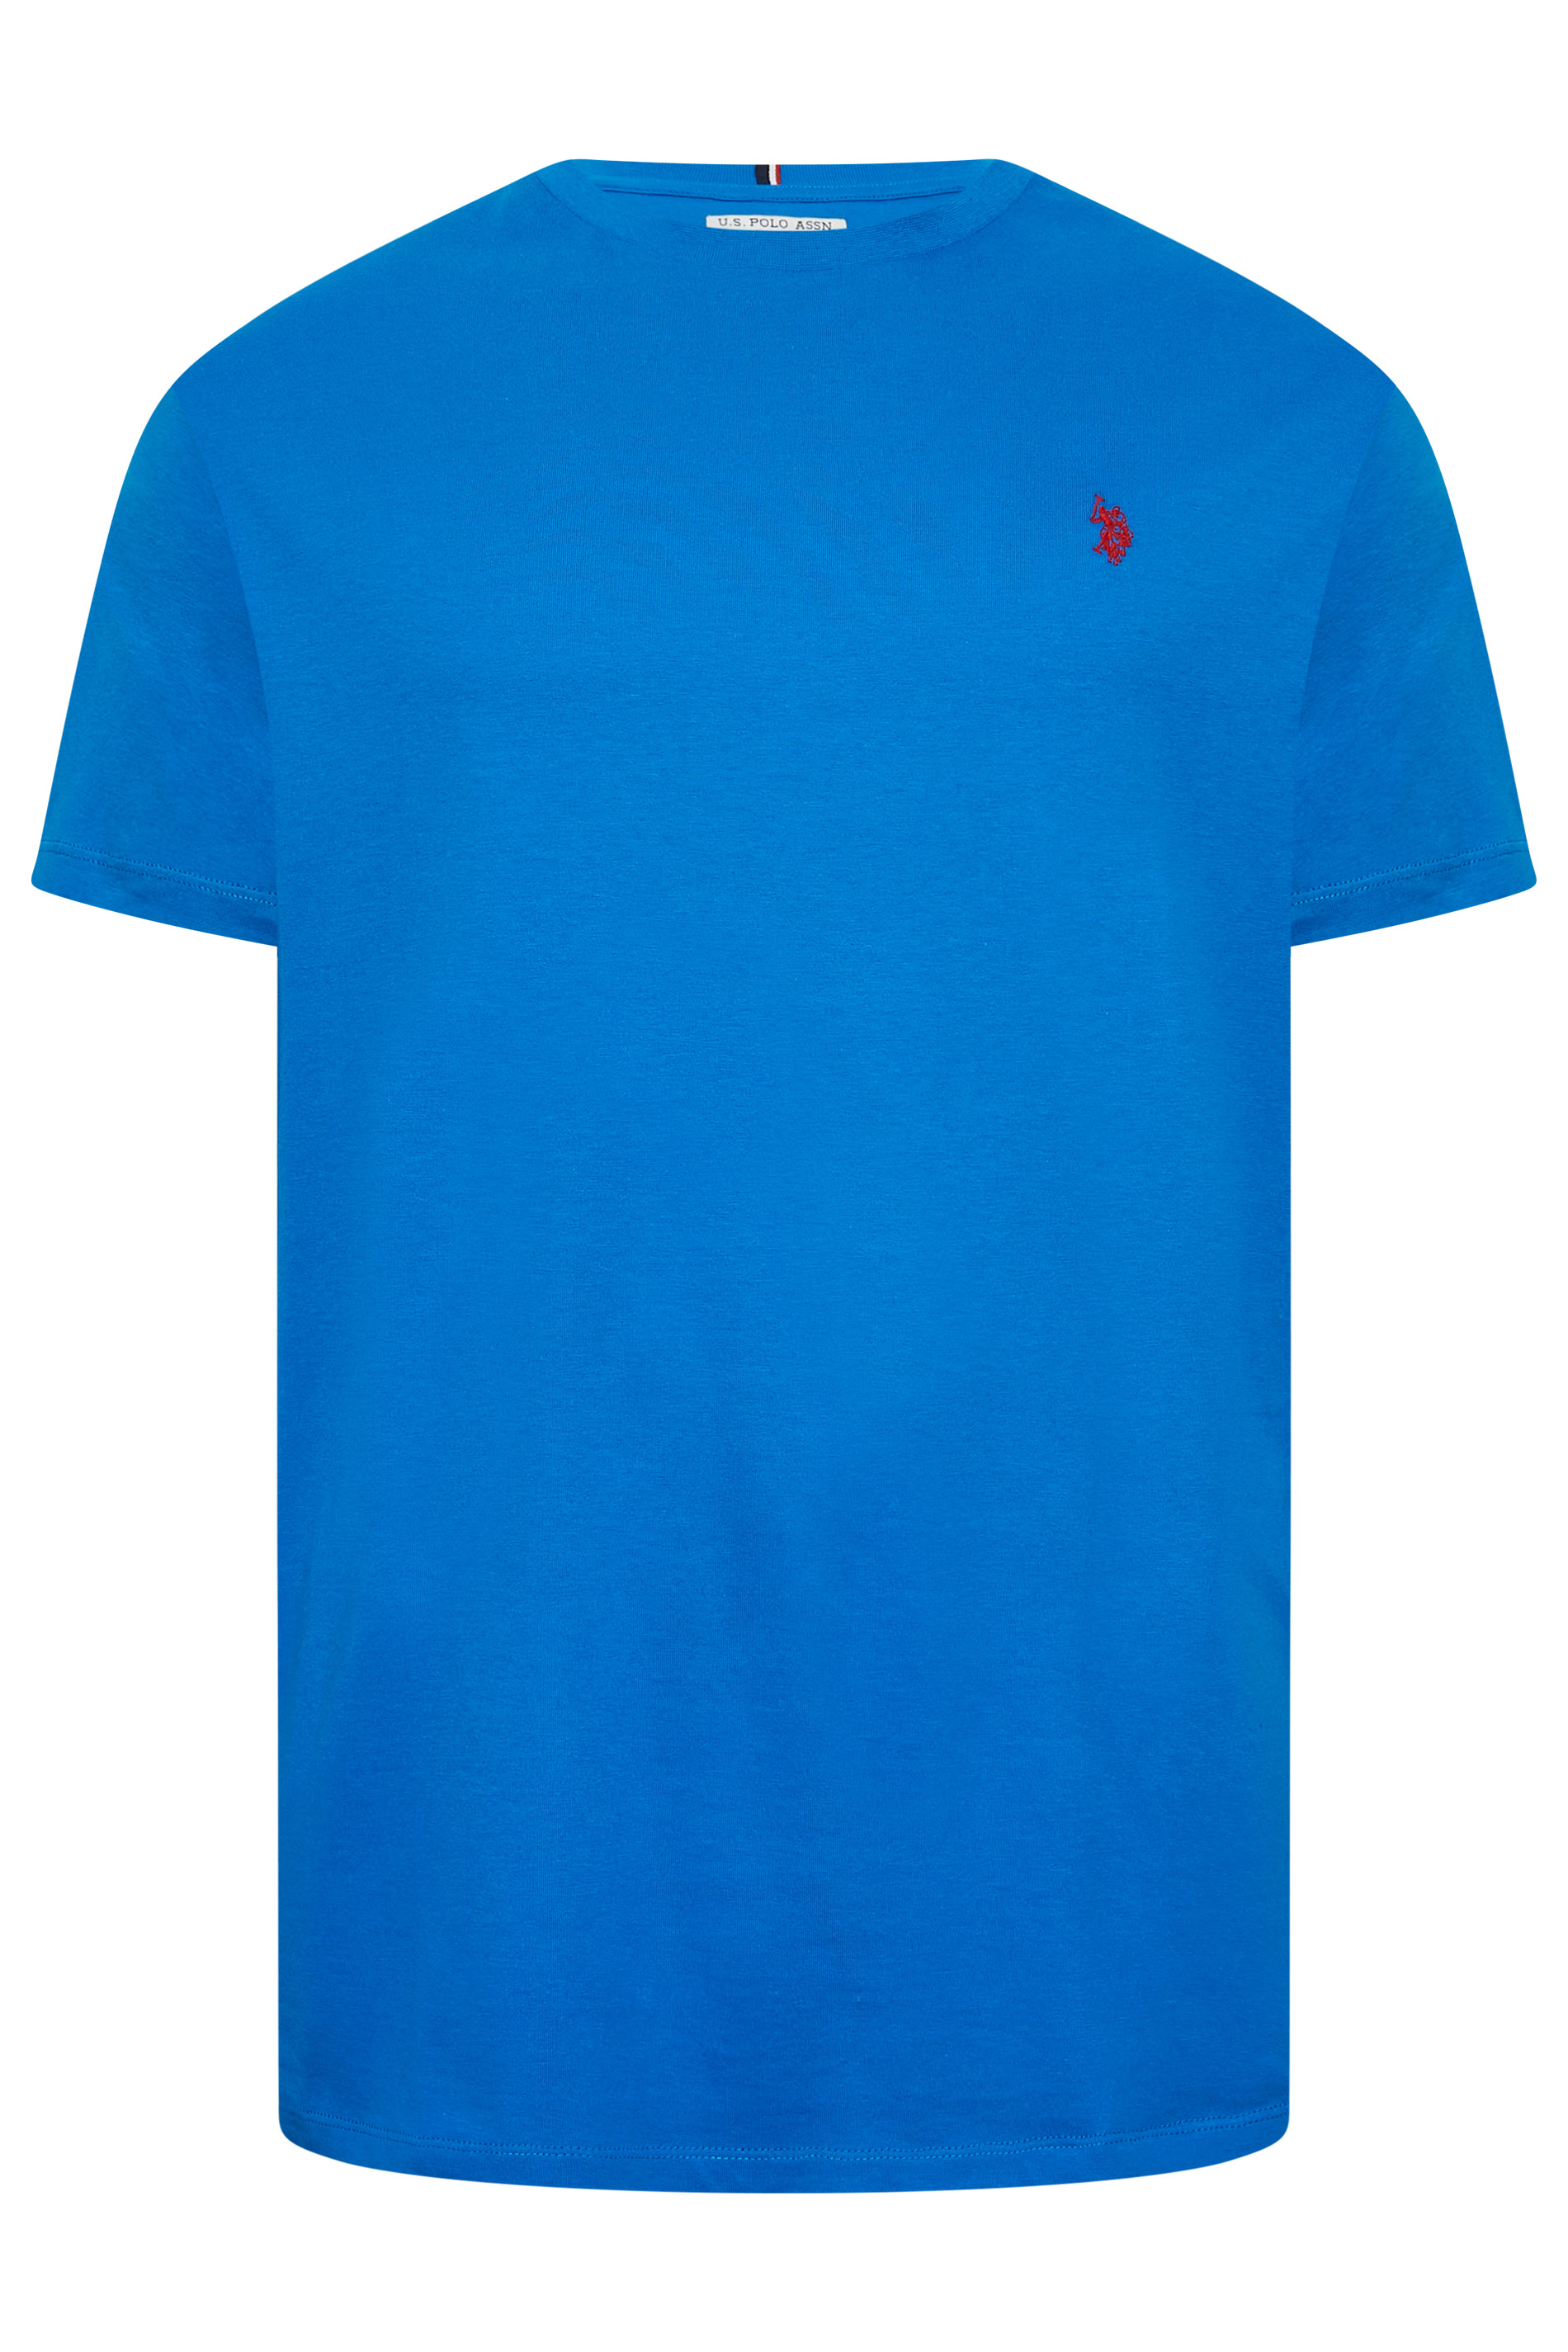 U.S. POLO ASSN. Big & Tall Blue Short Sleeve Core T-Shirt | BadRhino 2